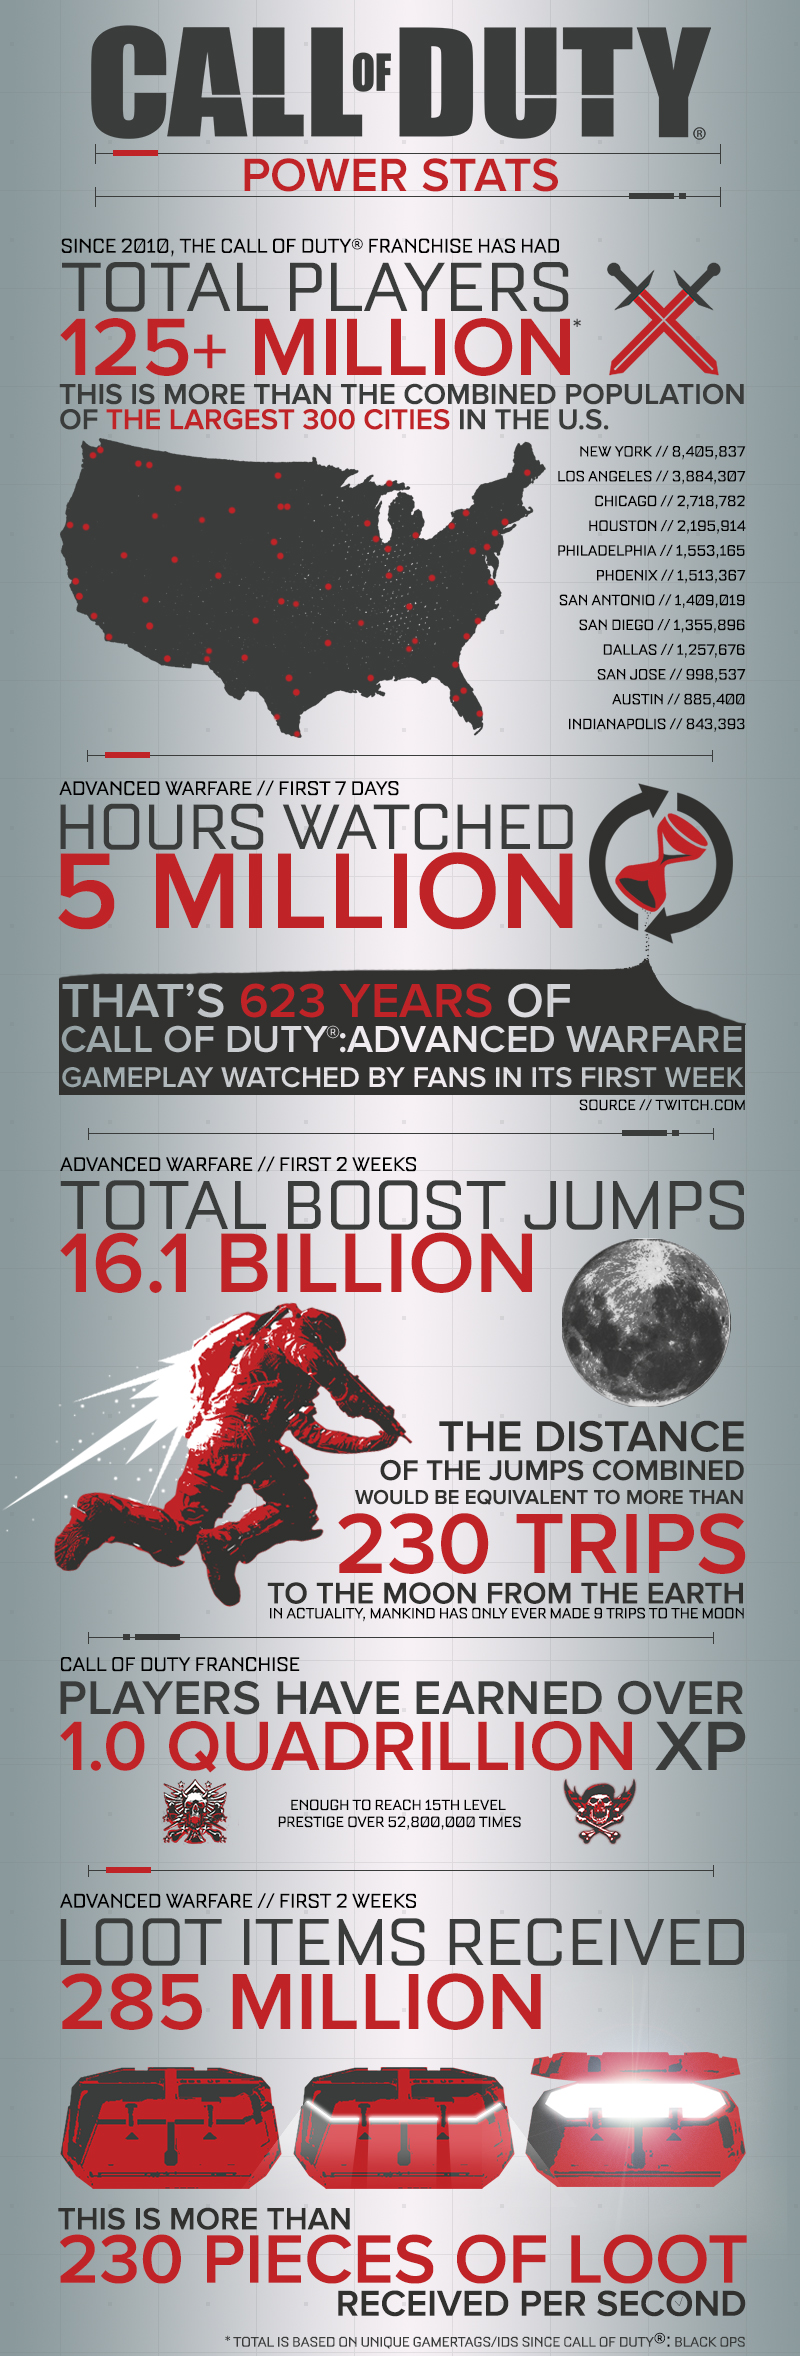 Call of Duty: Advanced Warfare infographic